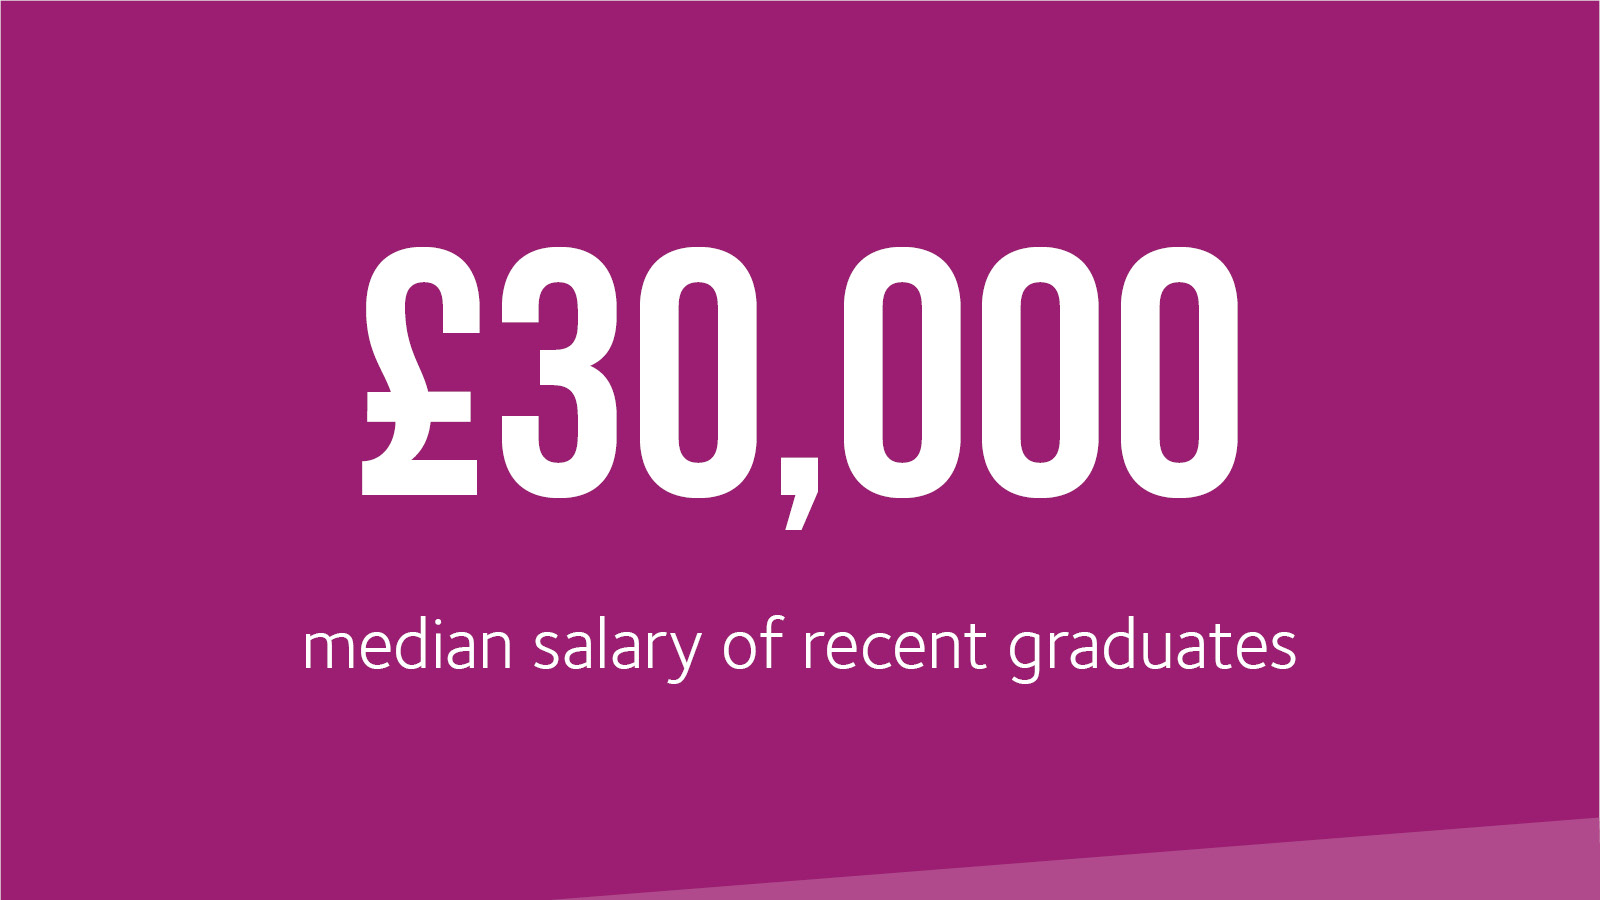 £30,000 median salary of recent graduates